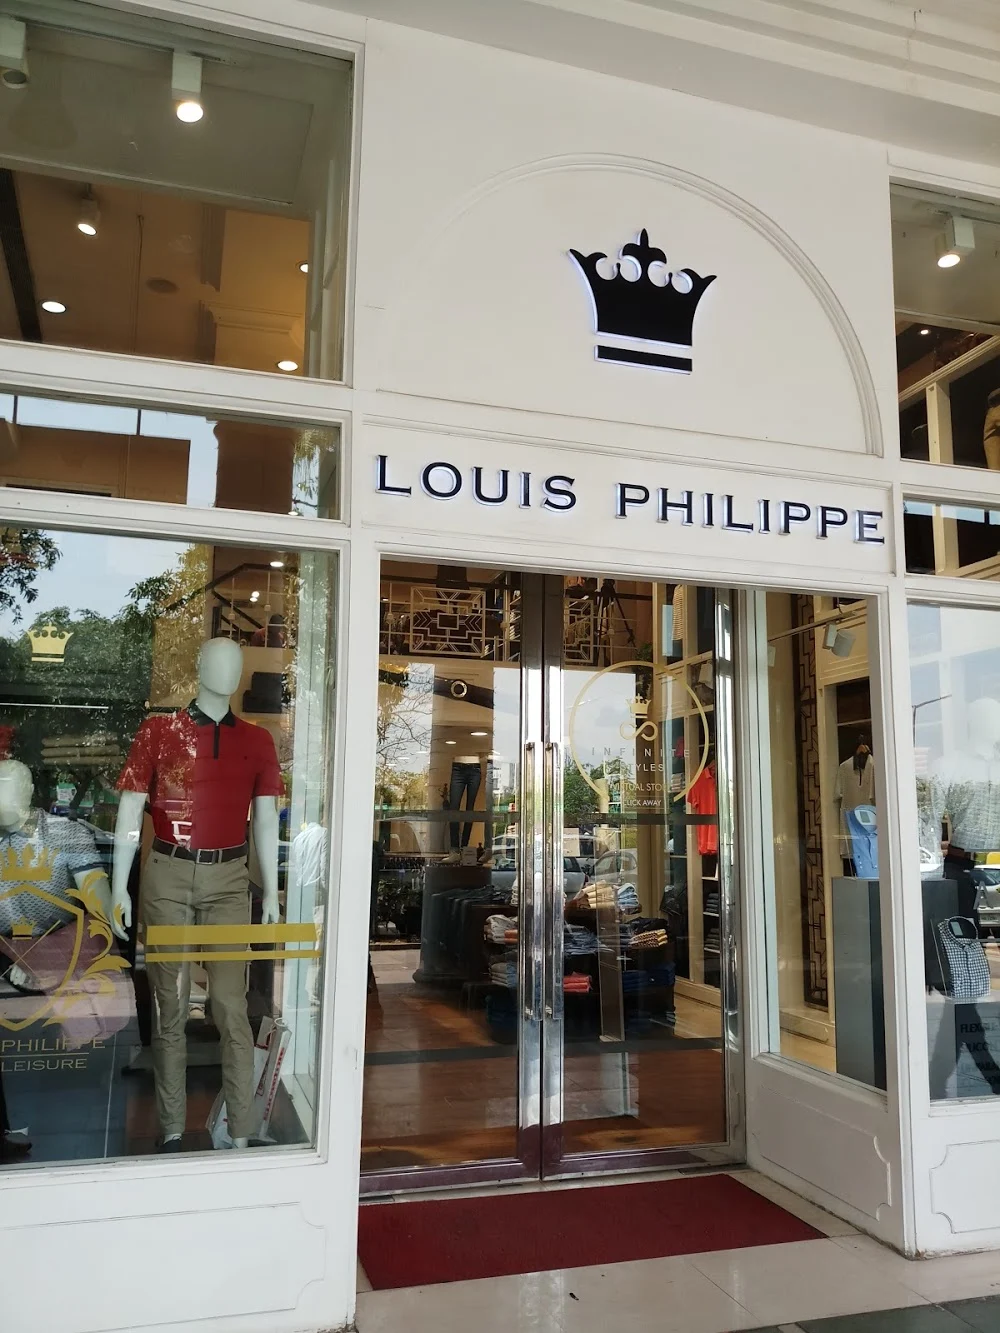 Photos of Louis Philippe, New BEL Road, Bangalore